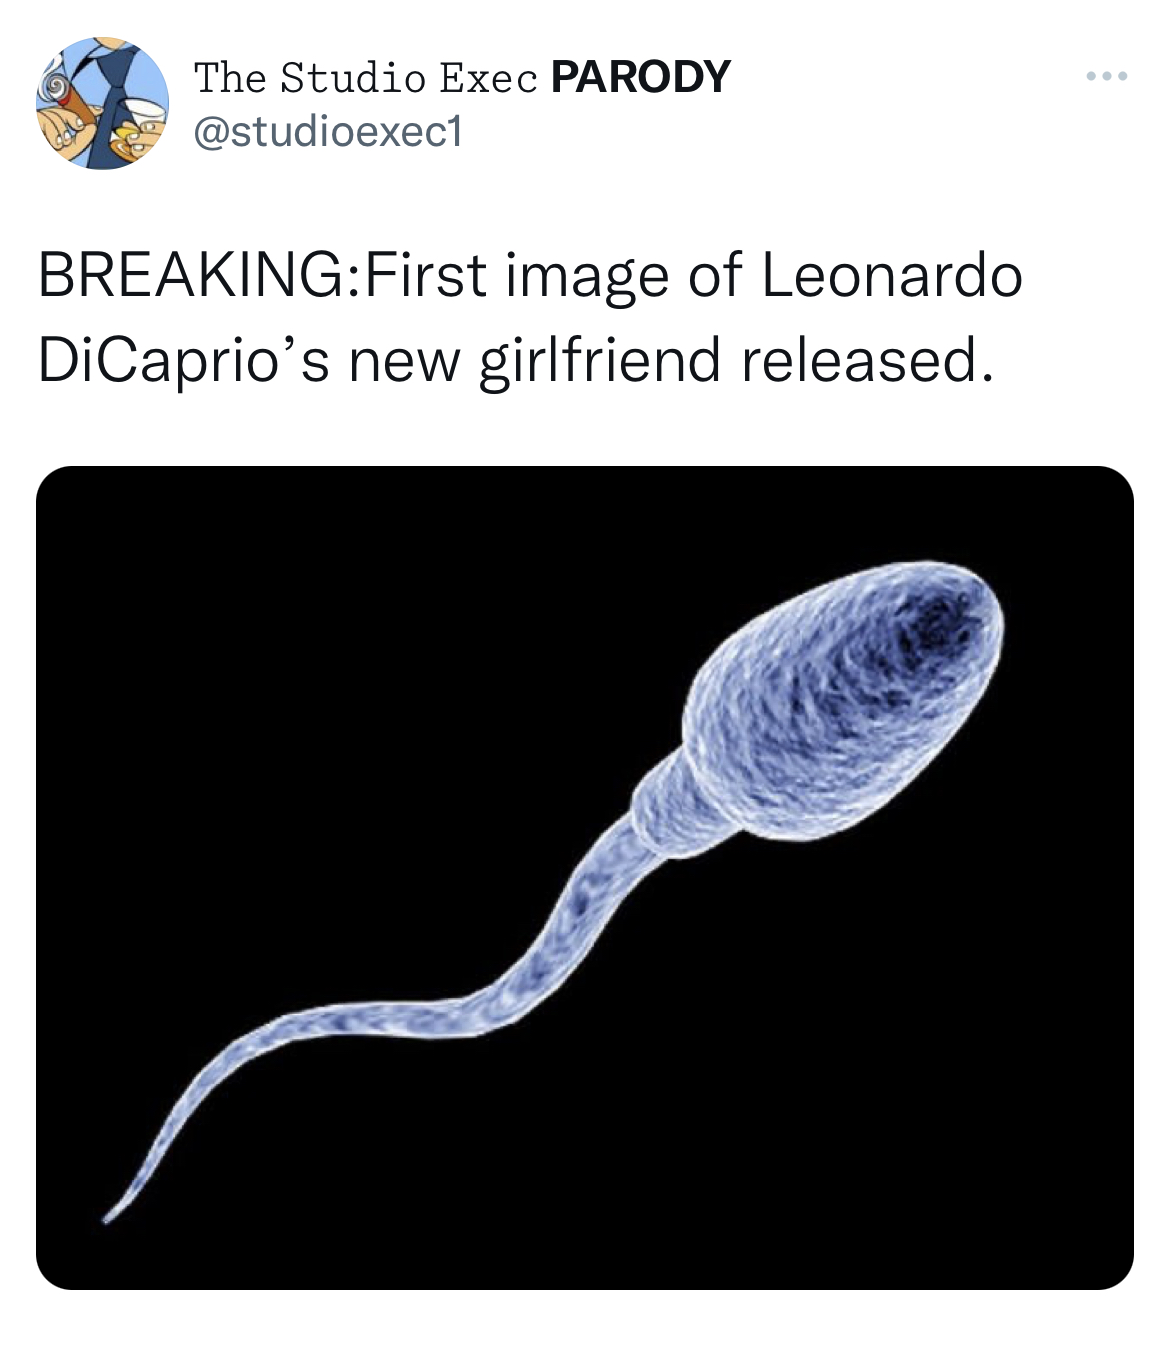 Leonardo DiCaprio Girlfriend Memes - that's a lot of information to swallow meme - The Studio Exec Parody BreakingFirst image of Leonardo DiCaprio's new girlfriend released.